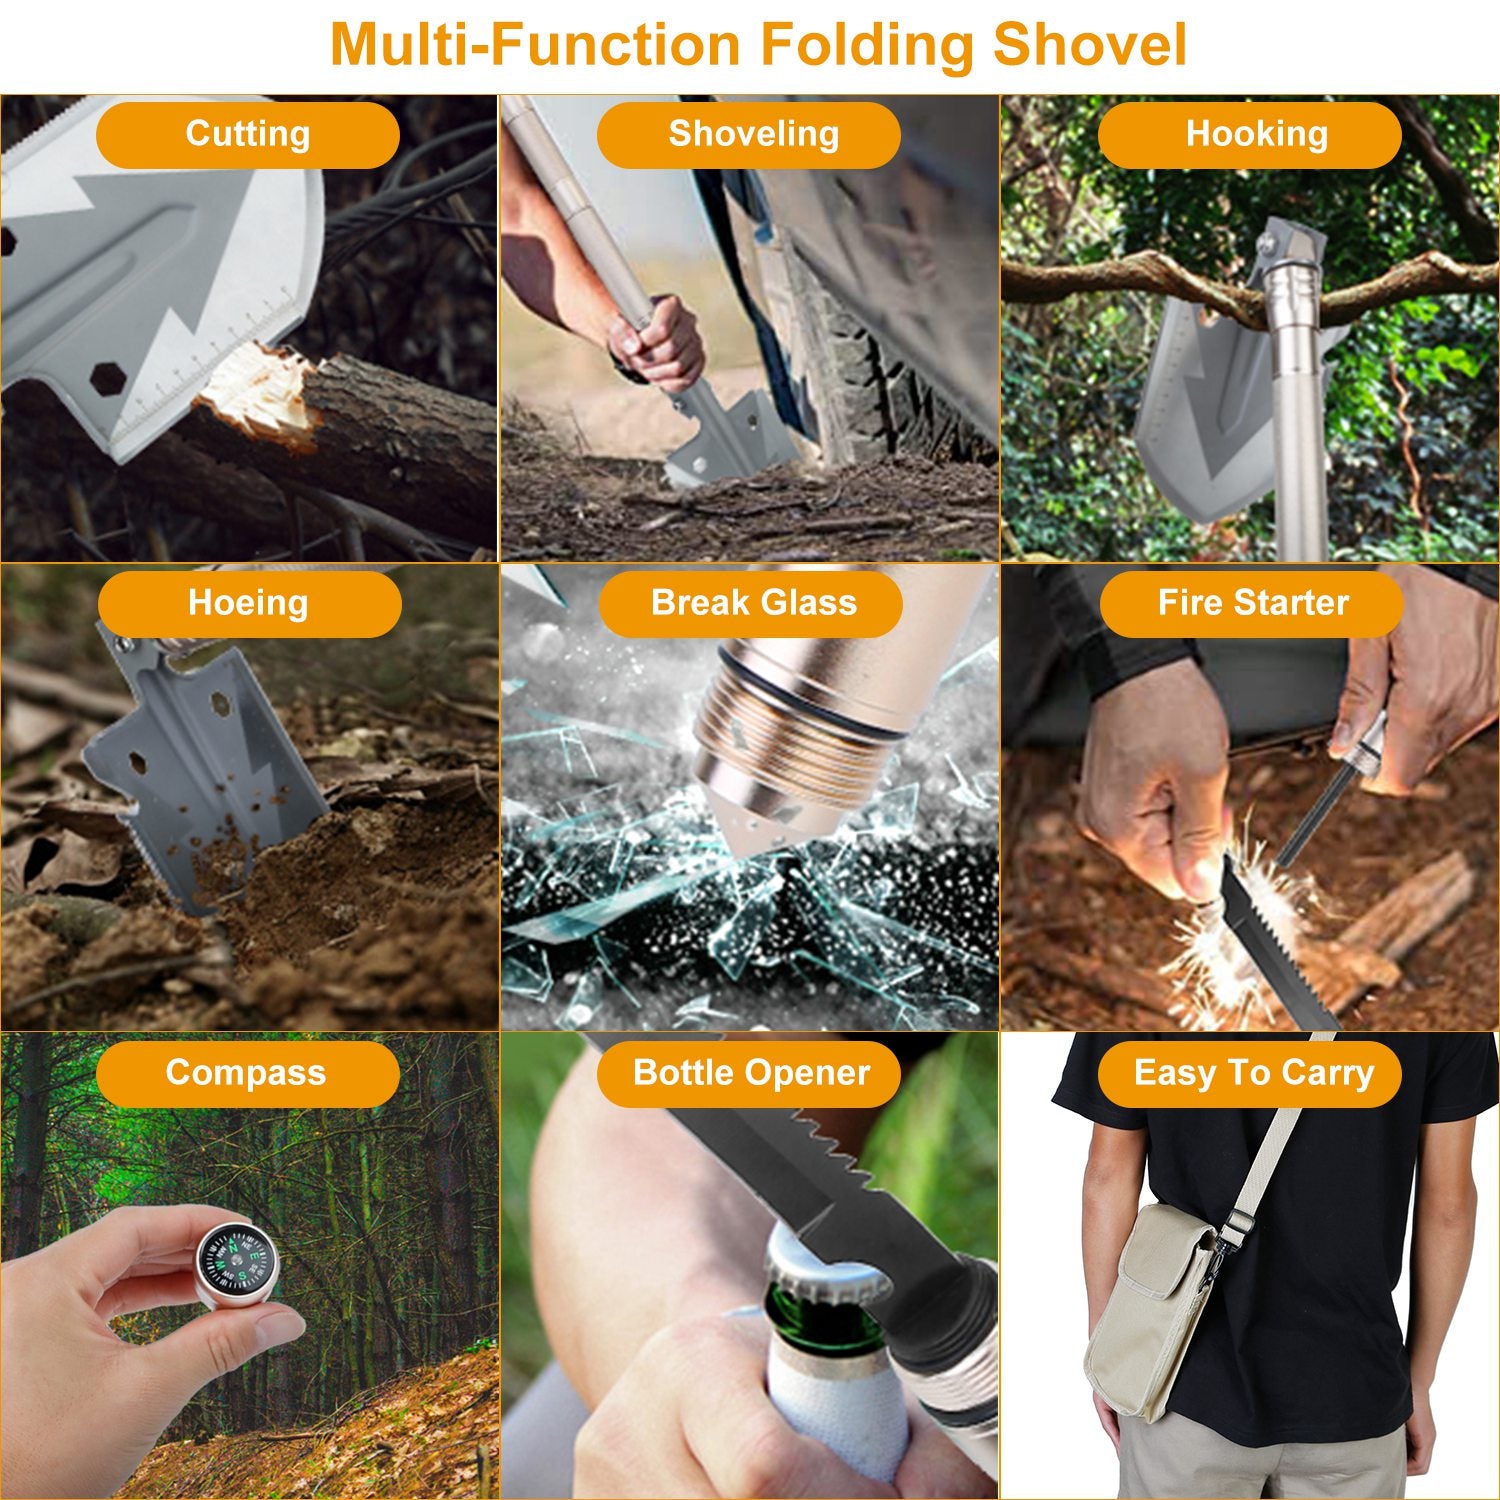 Multifunctional Folding Shovel Survival Kit for Camping Hiking Outdoor